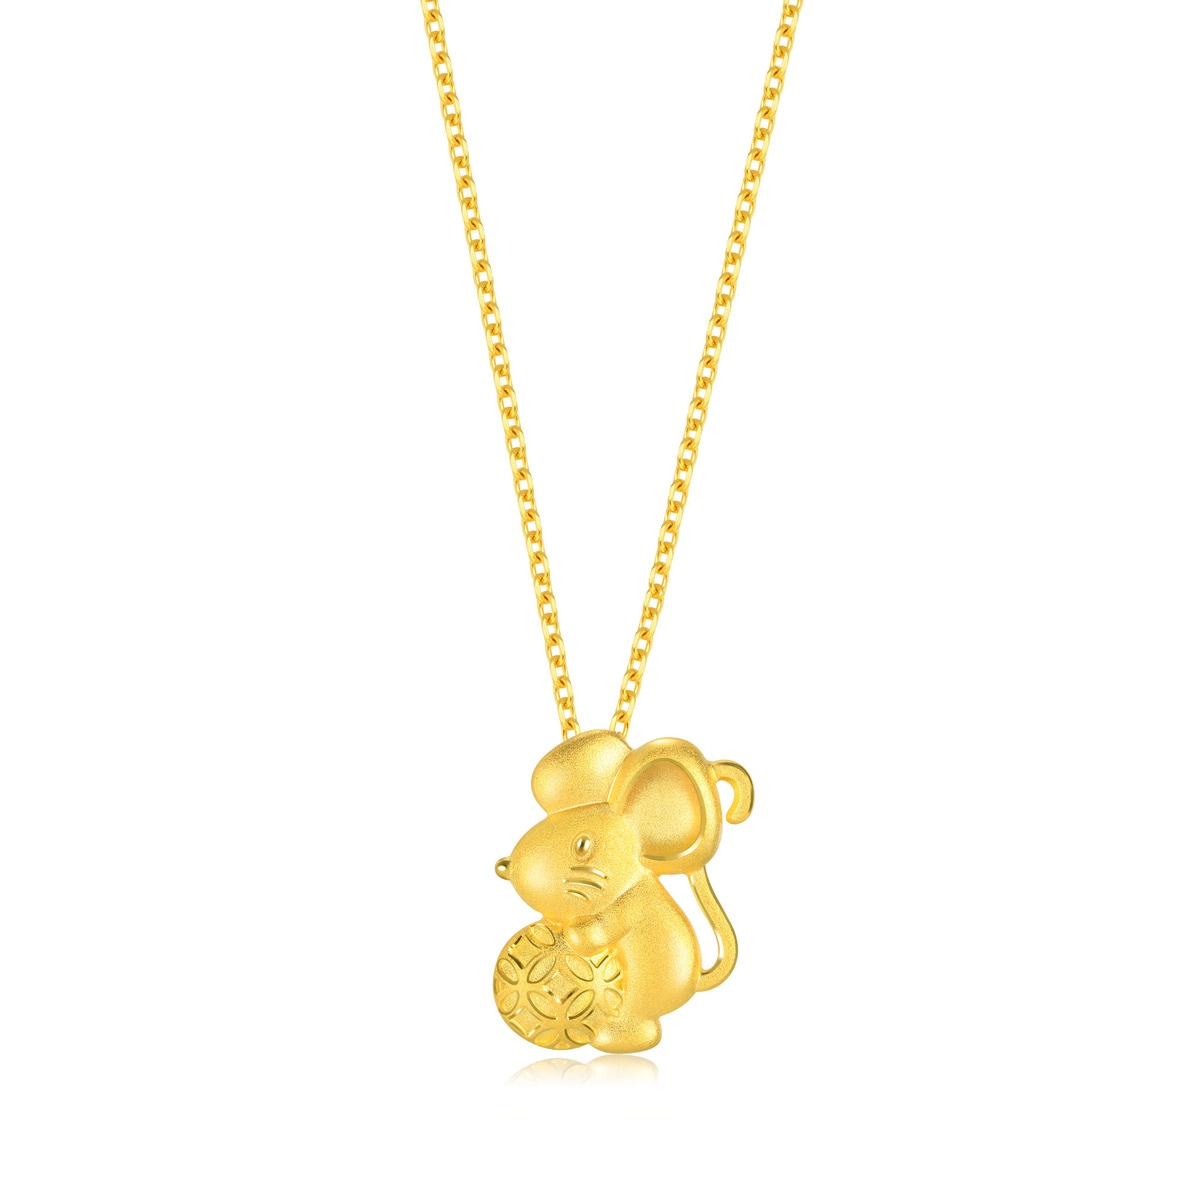 PetChat 999.9 Gold Pendant - 91460P | Chow Sang Sang Jewellery